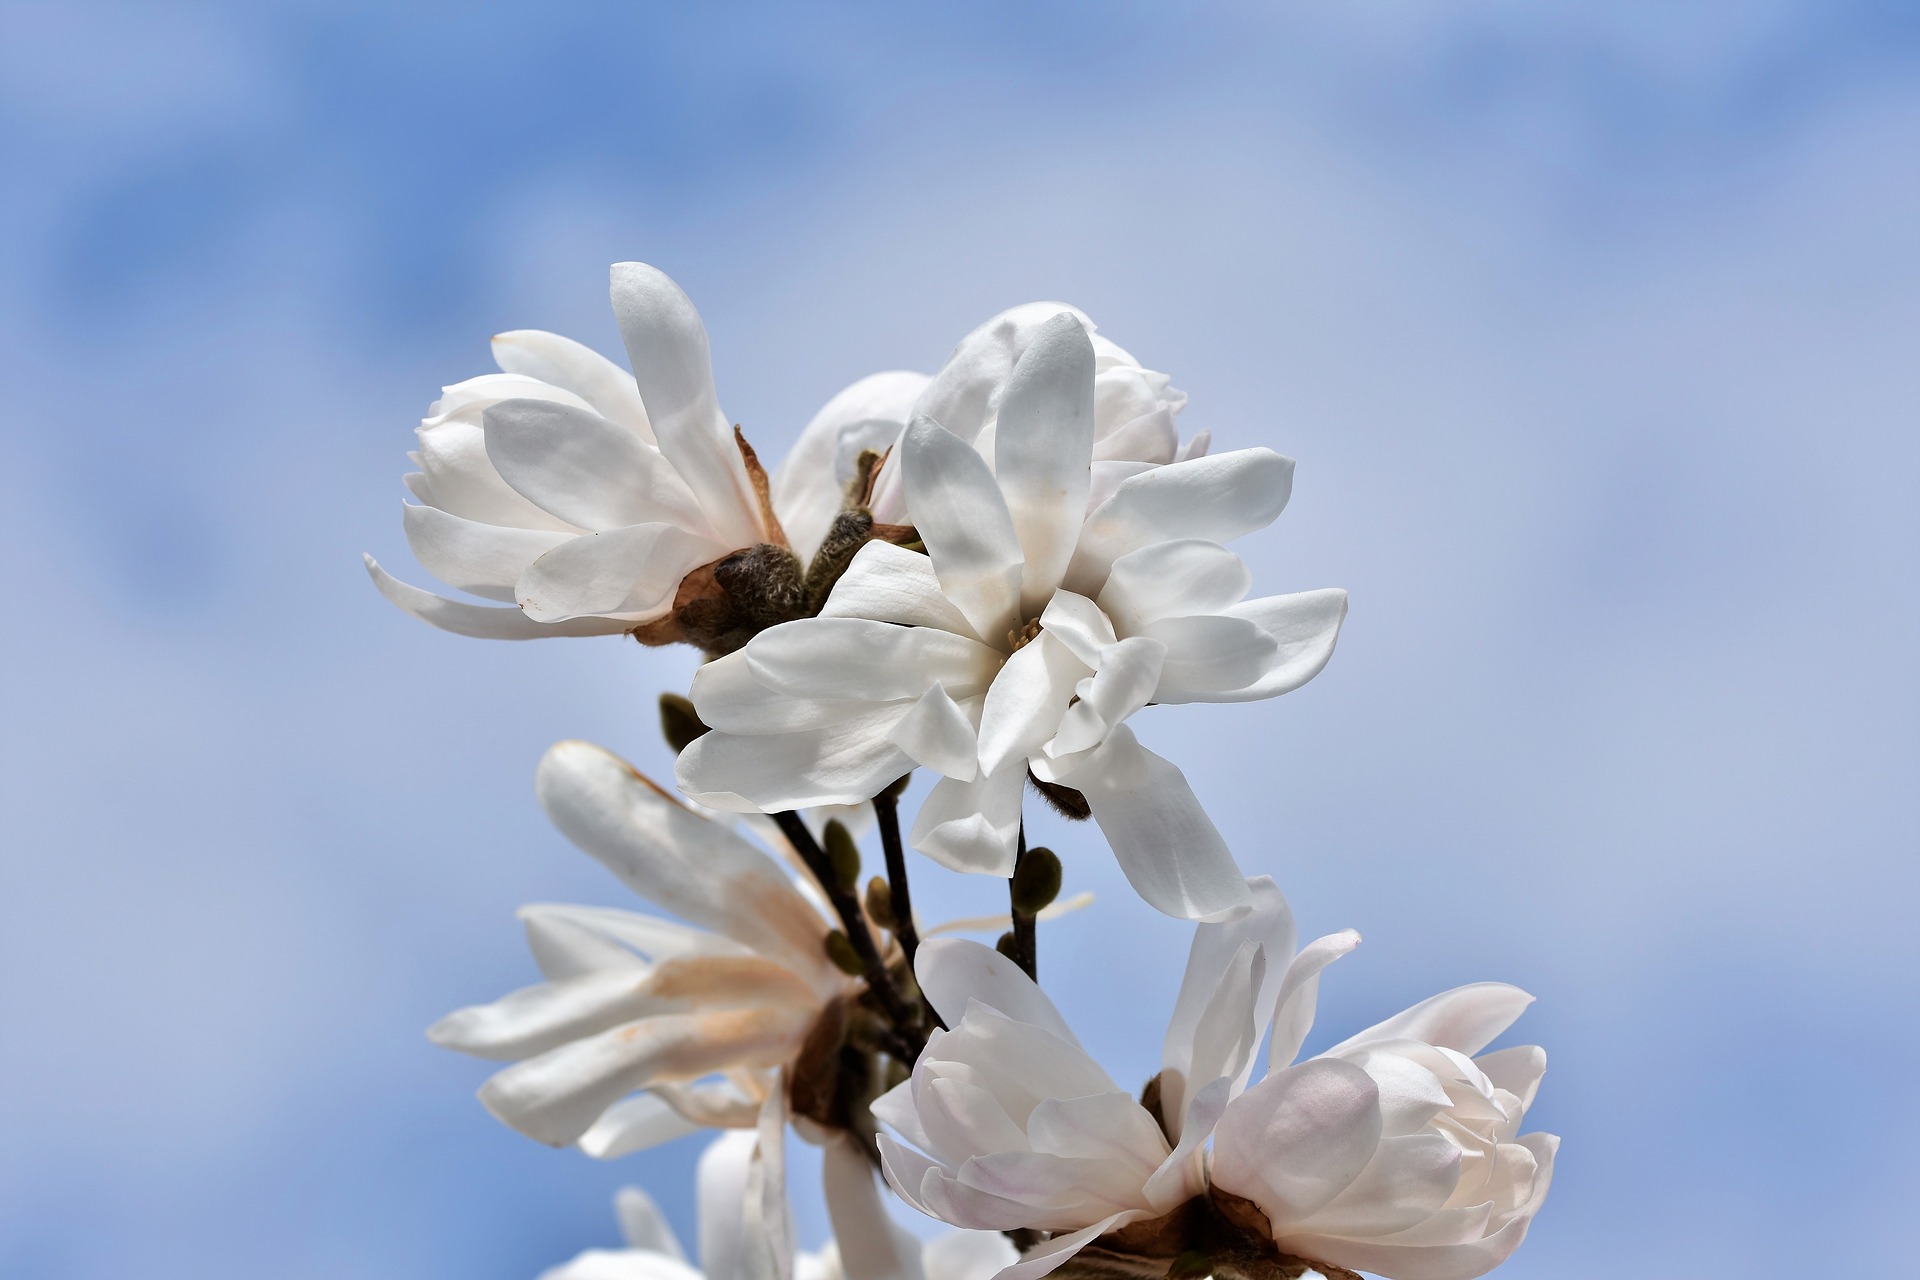 star-magnolia-4109844_1920.jpg